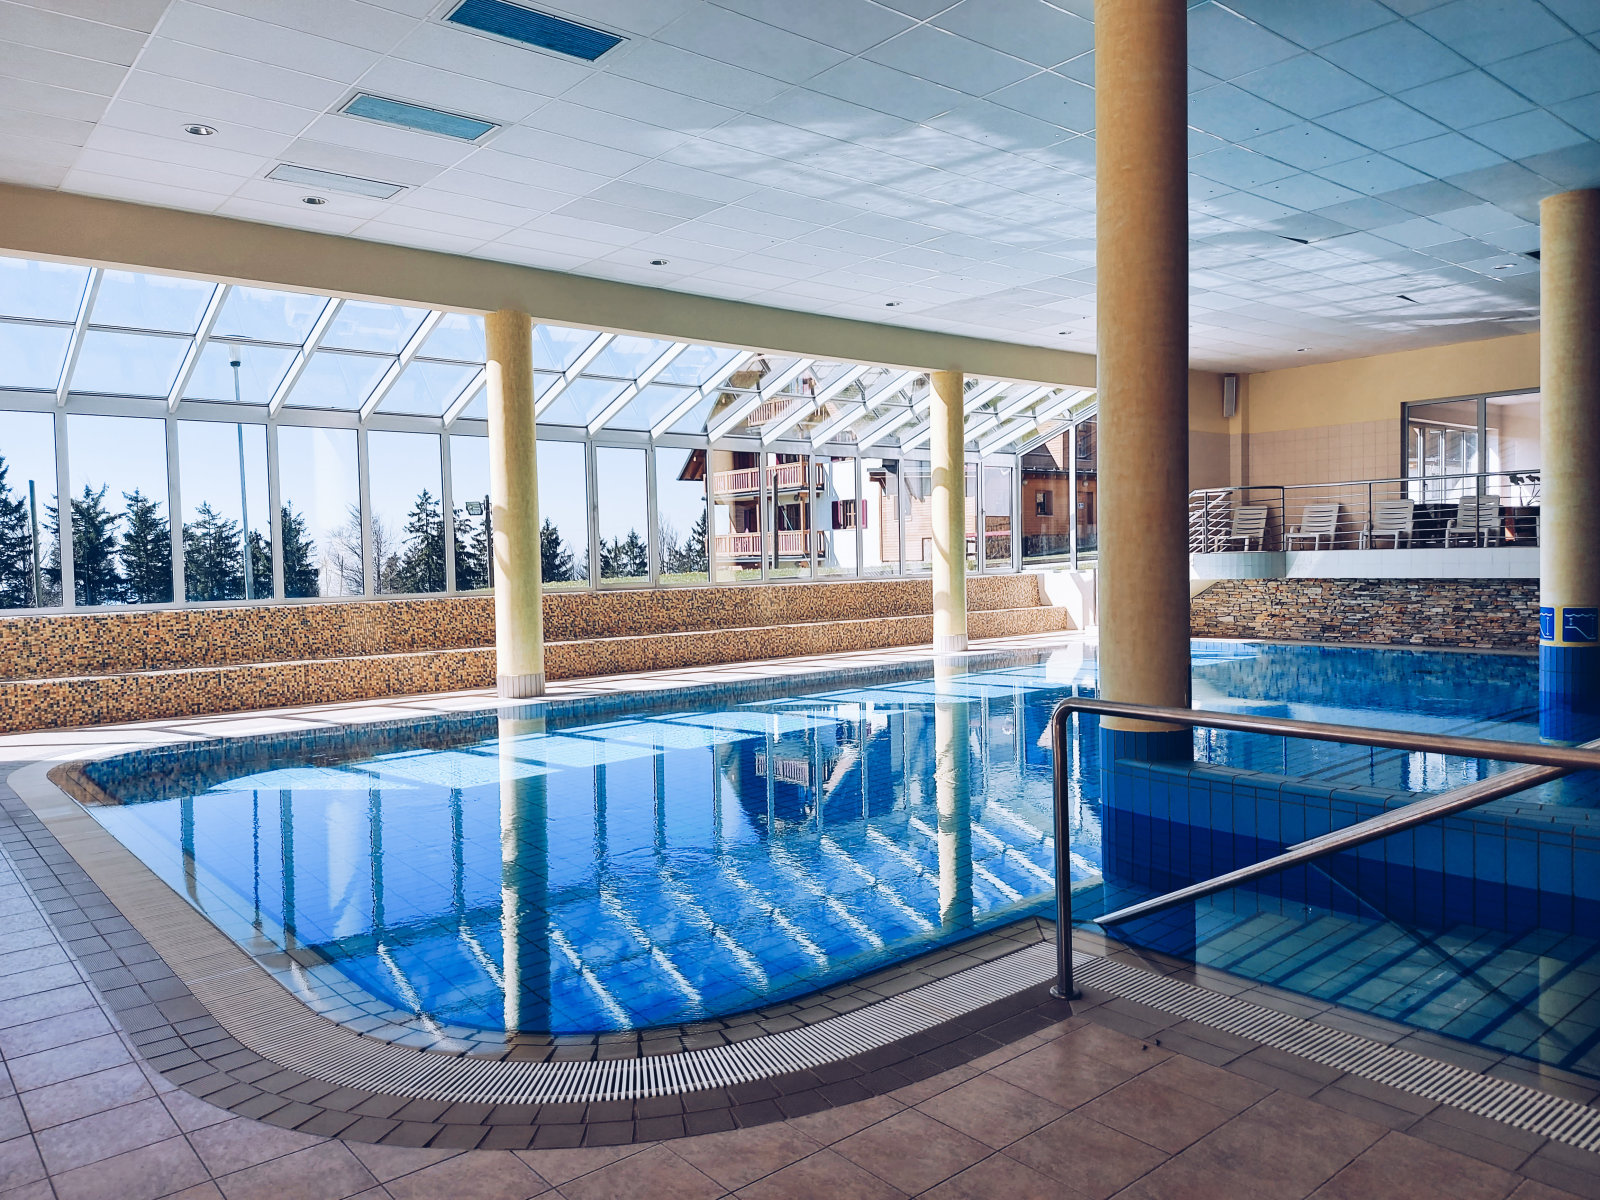 Kopanje-Maribor-ogrevan-bazen-finska-savna-whirlpool-Spa-center-Wellness-hia-Pohorje-Village.jpg